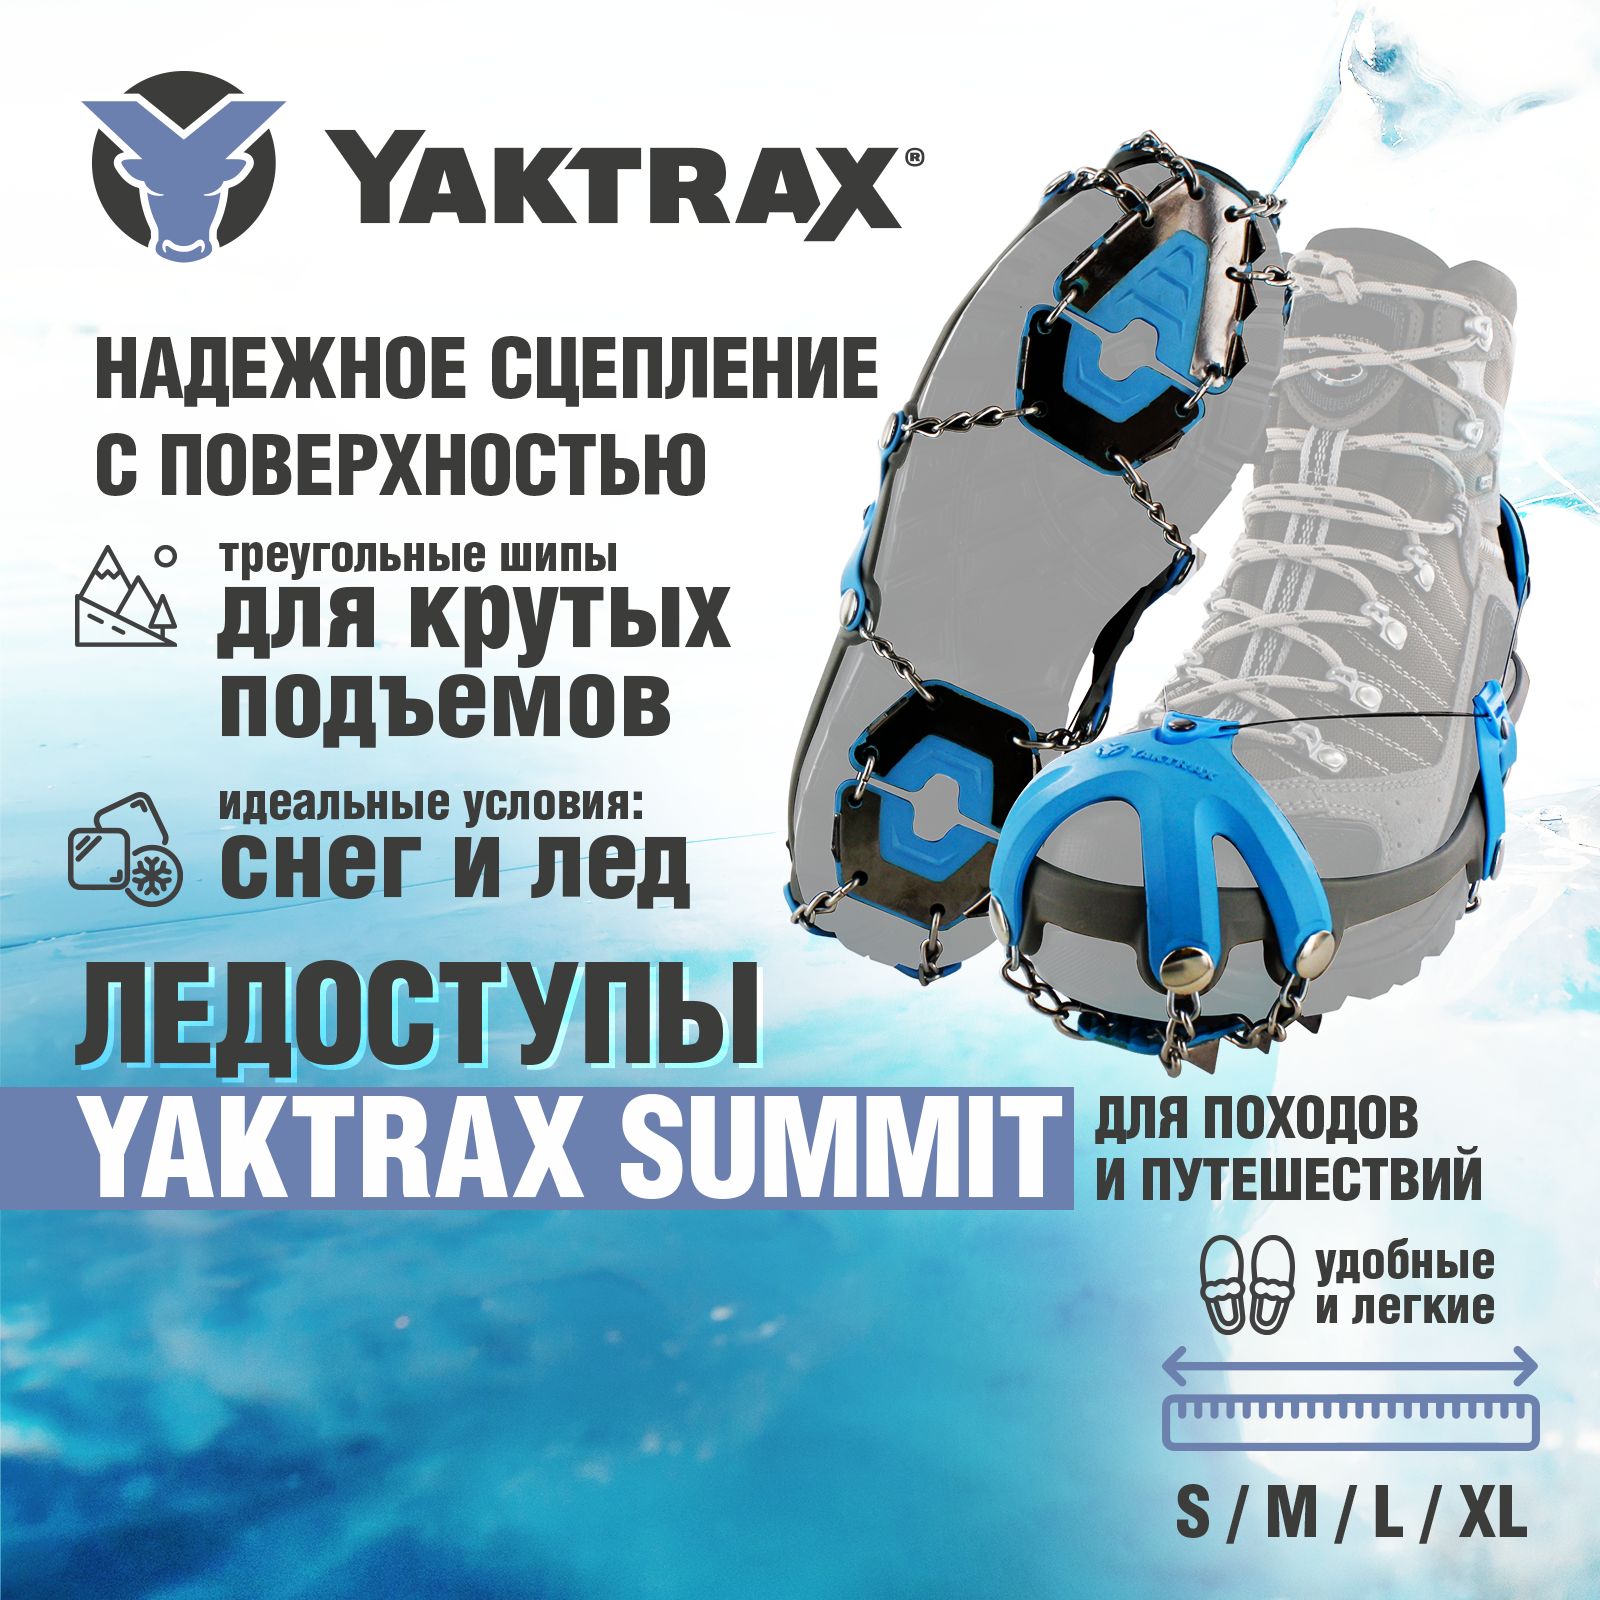 Ледоступы YAKTRAX Summit, размер L - 46-48